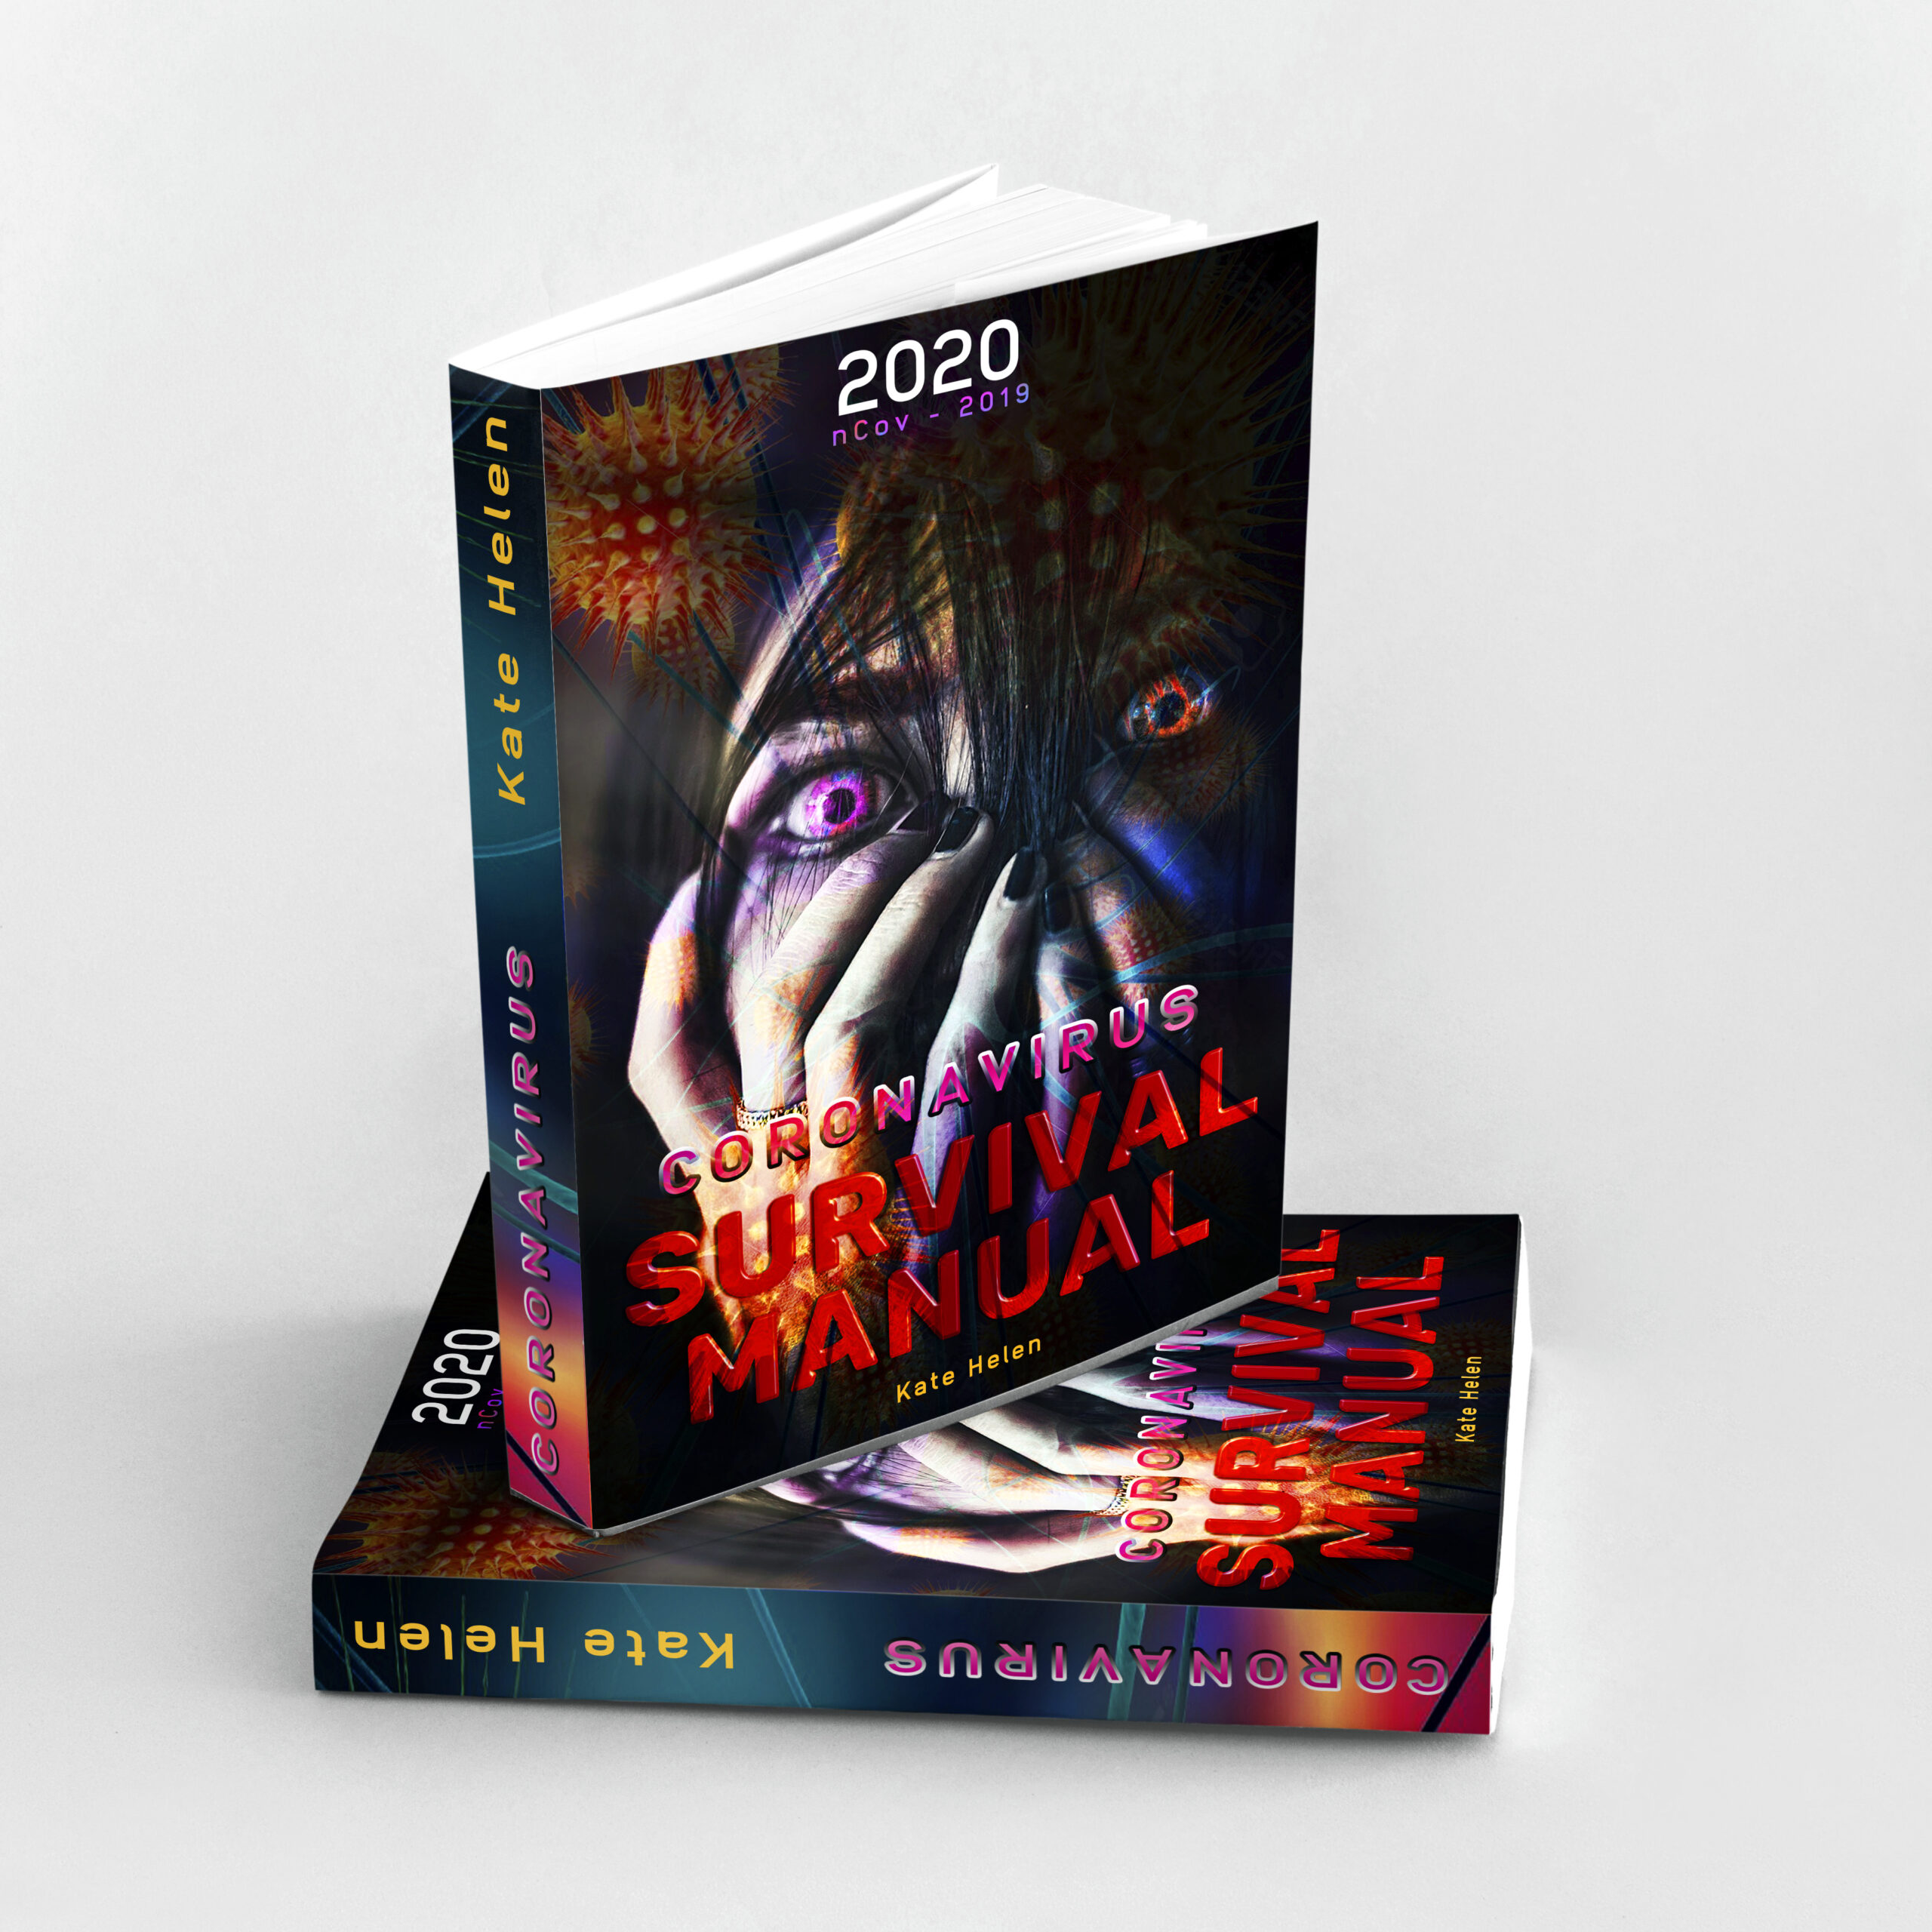 FREE: CORONAVIRUS BOOK 2020_SURVIVAL MANUAL by Kate Helen